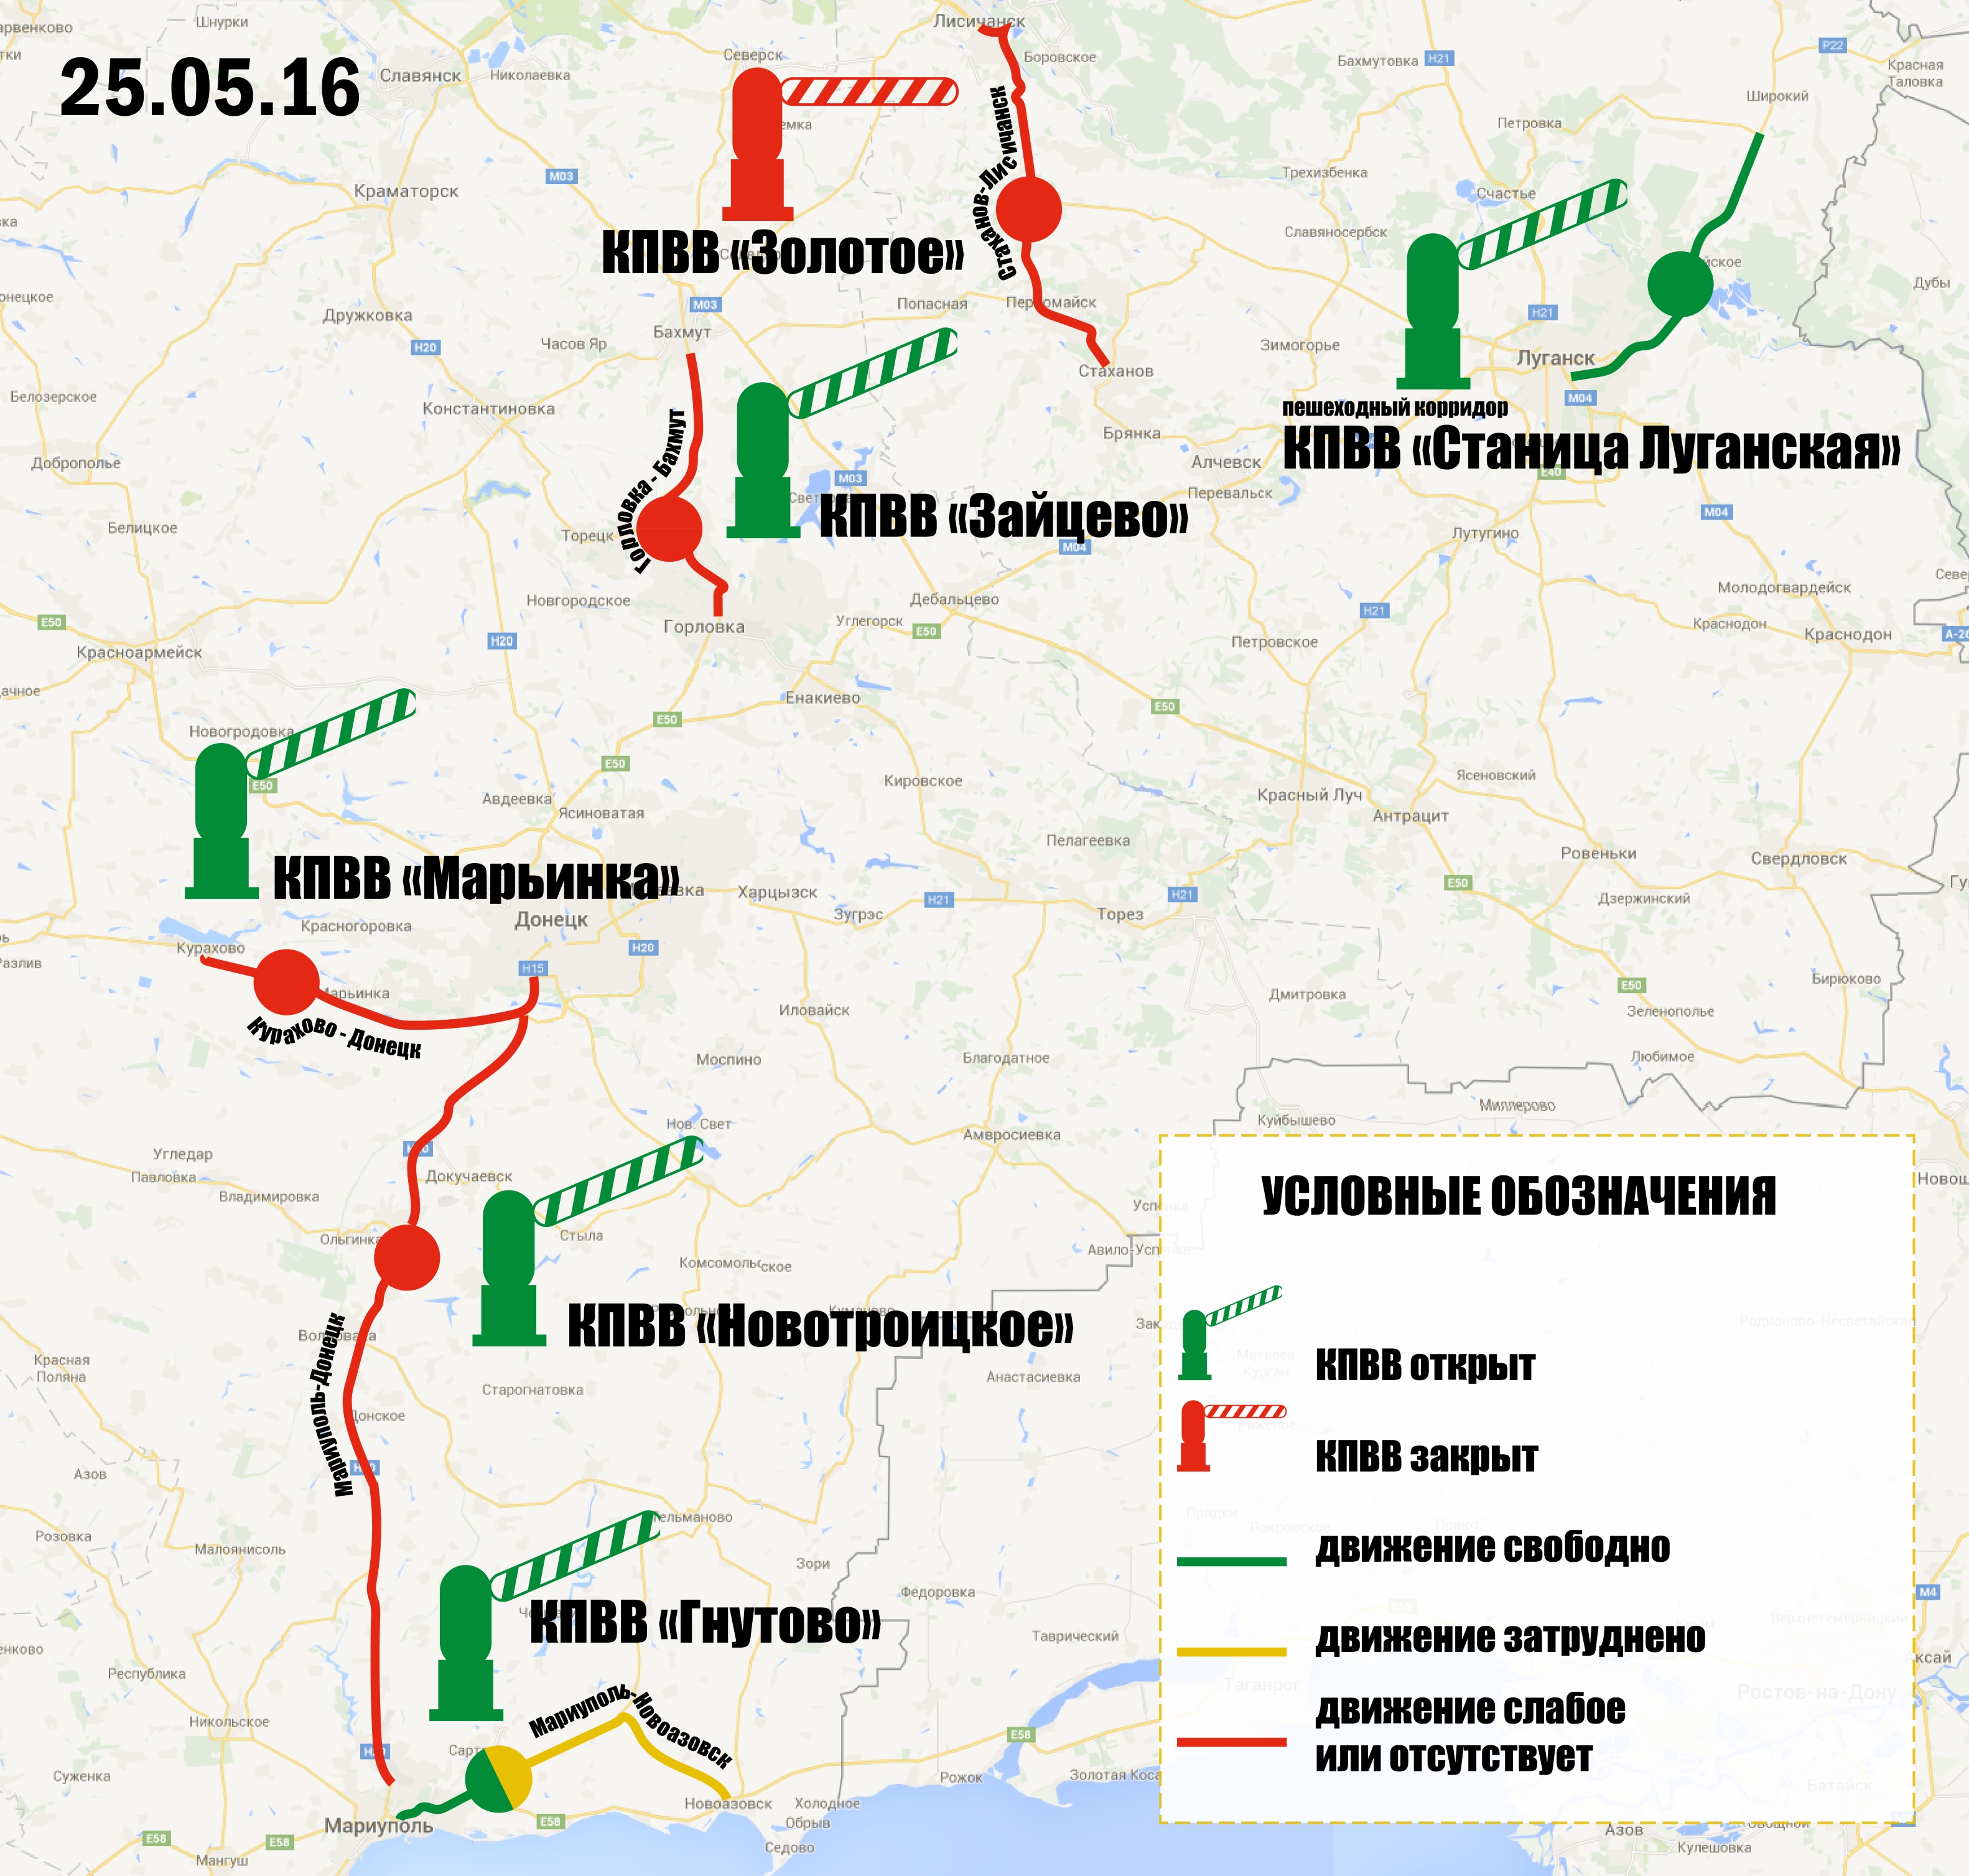 Ситуация на блокпостах сегодня(движение пересекающих) Map_kpvv_V2-01_25.05